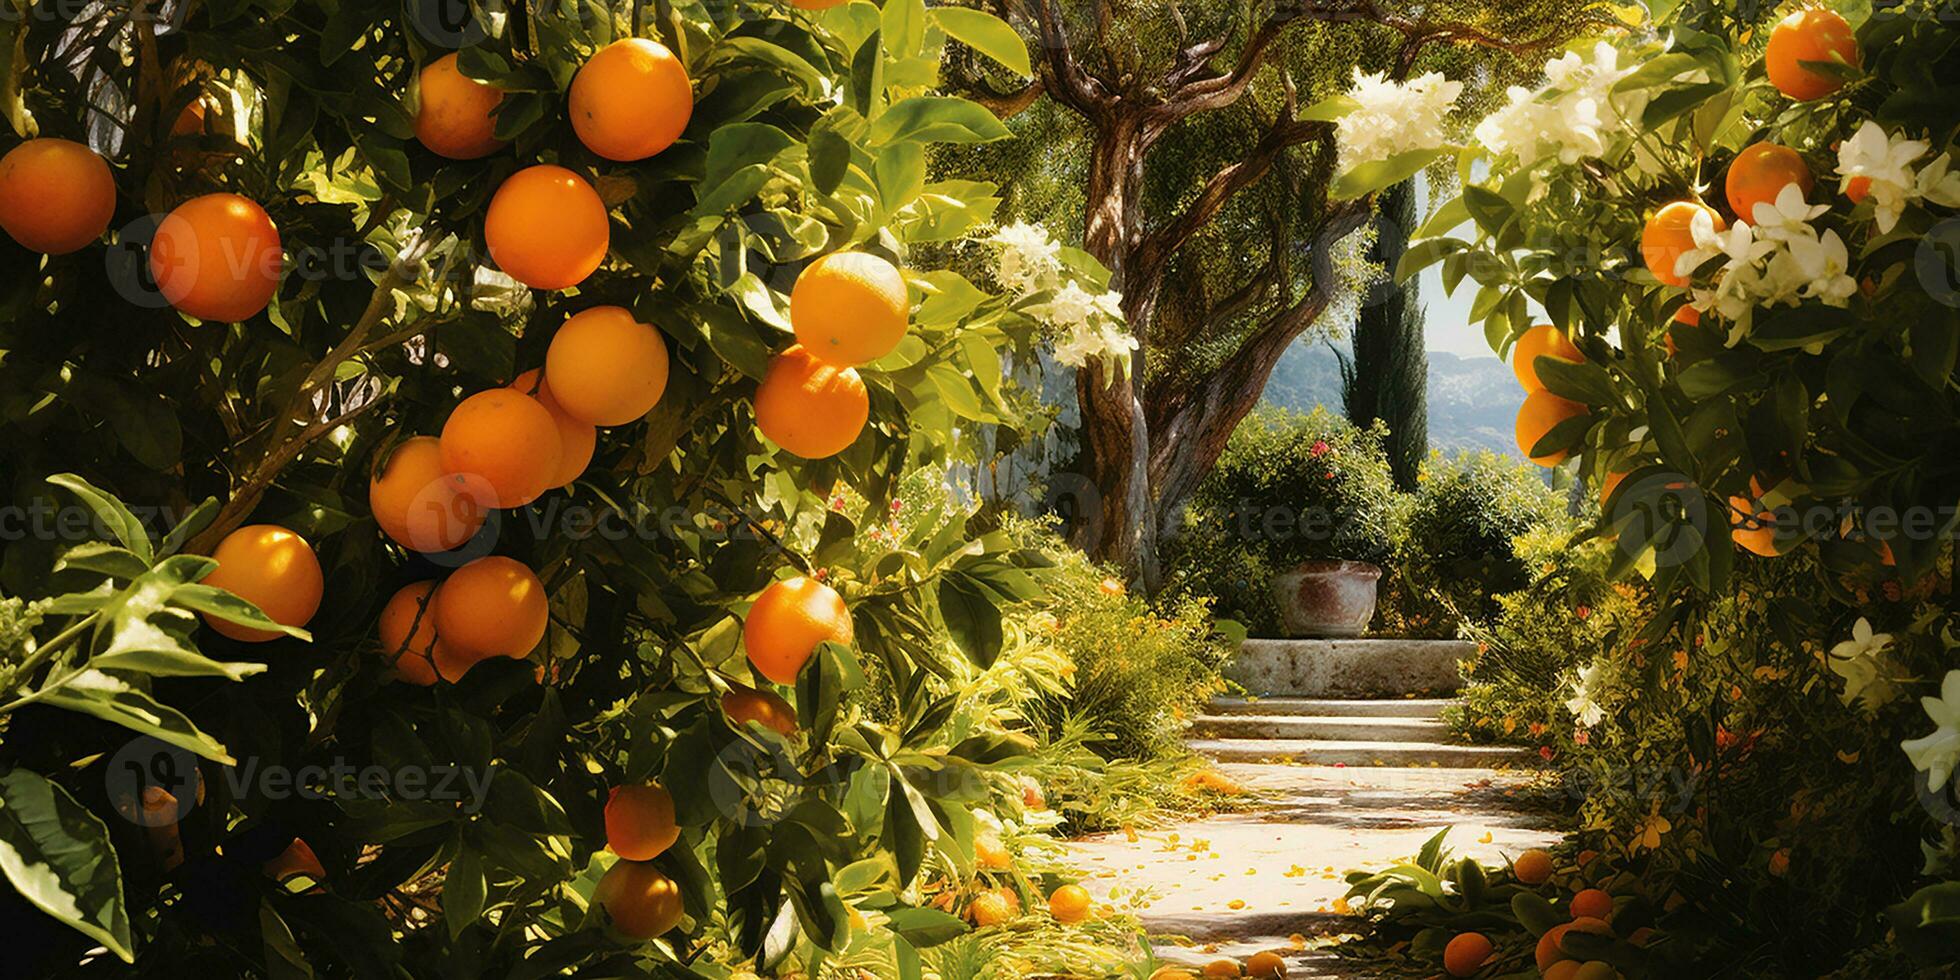 ai gerado lindo jardim com laranja árvores maduro frutas. colheita estação laranjas, tangerinas, toranjas foto